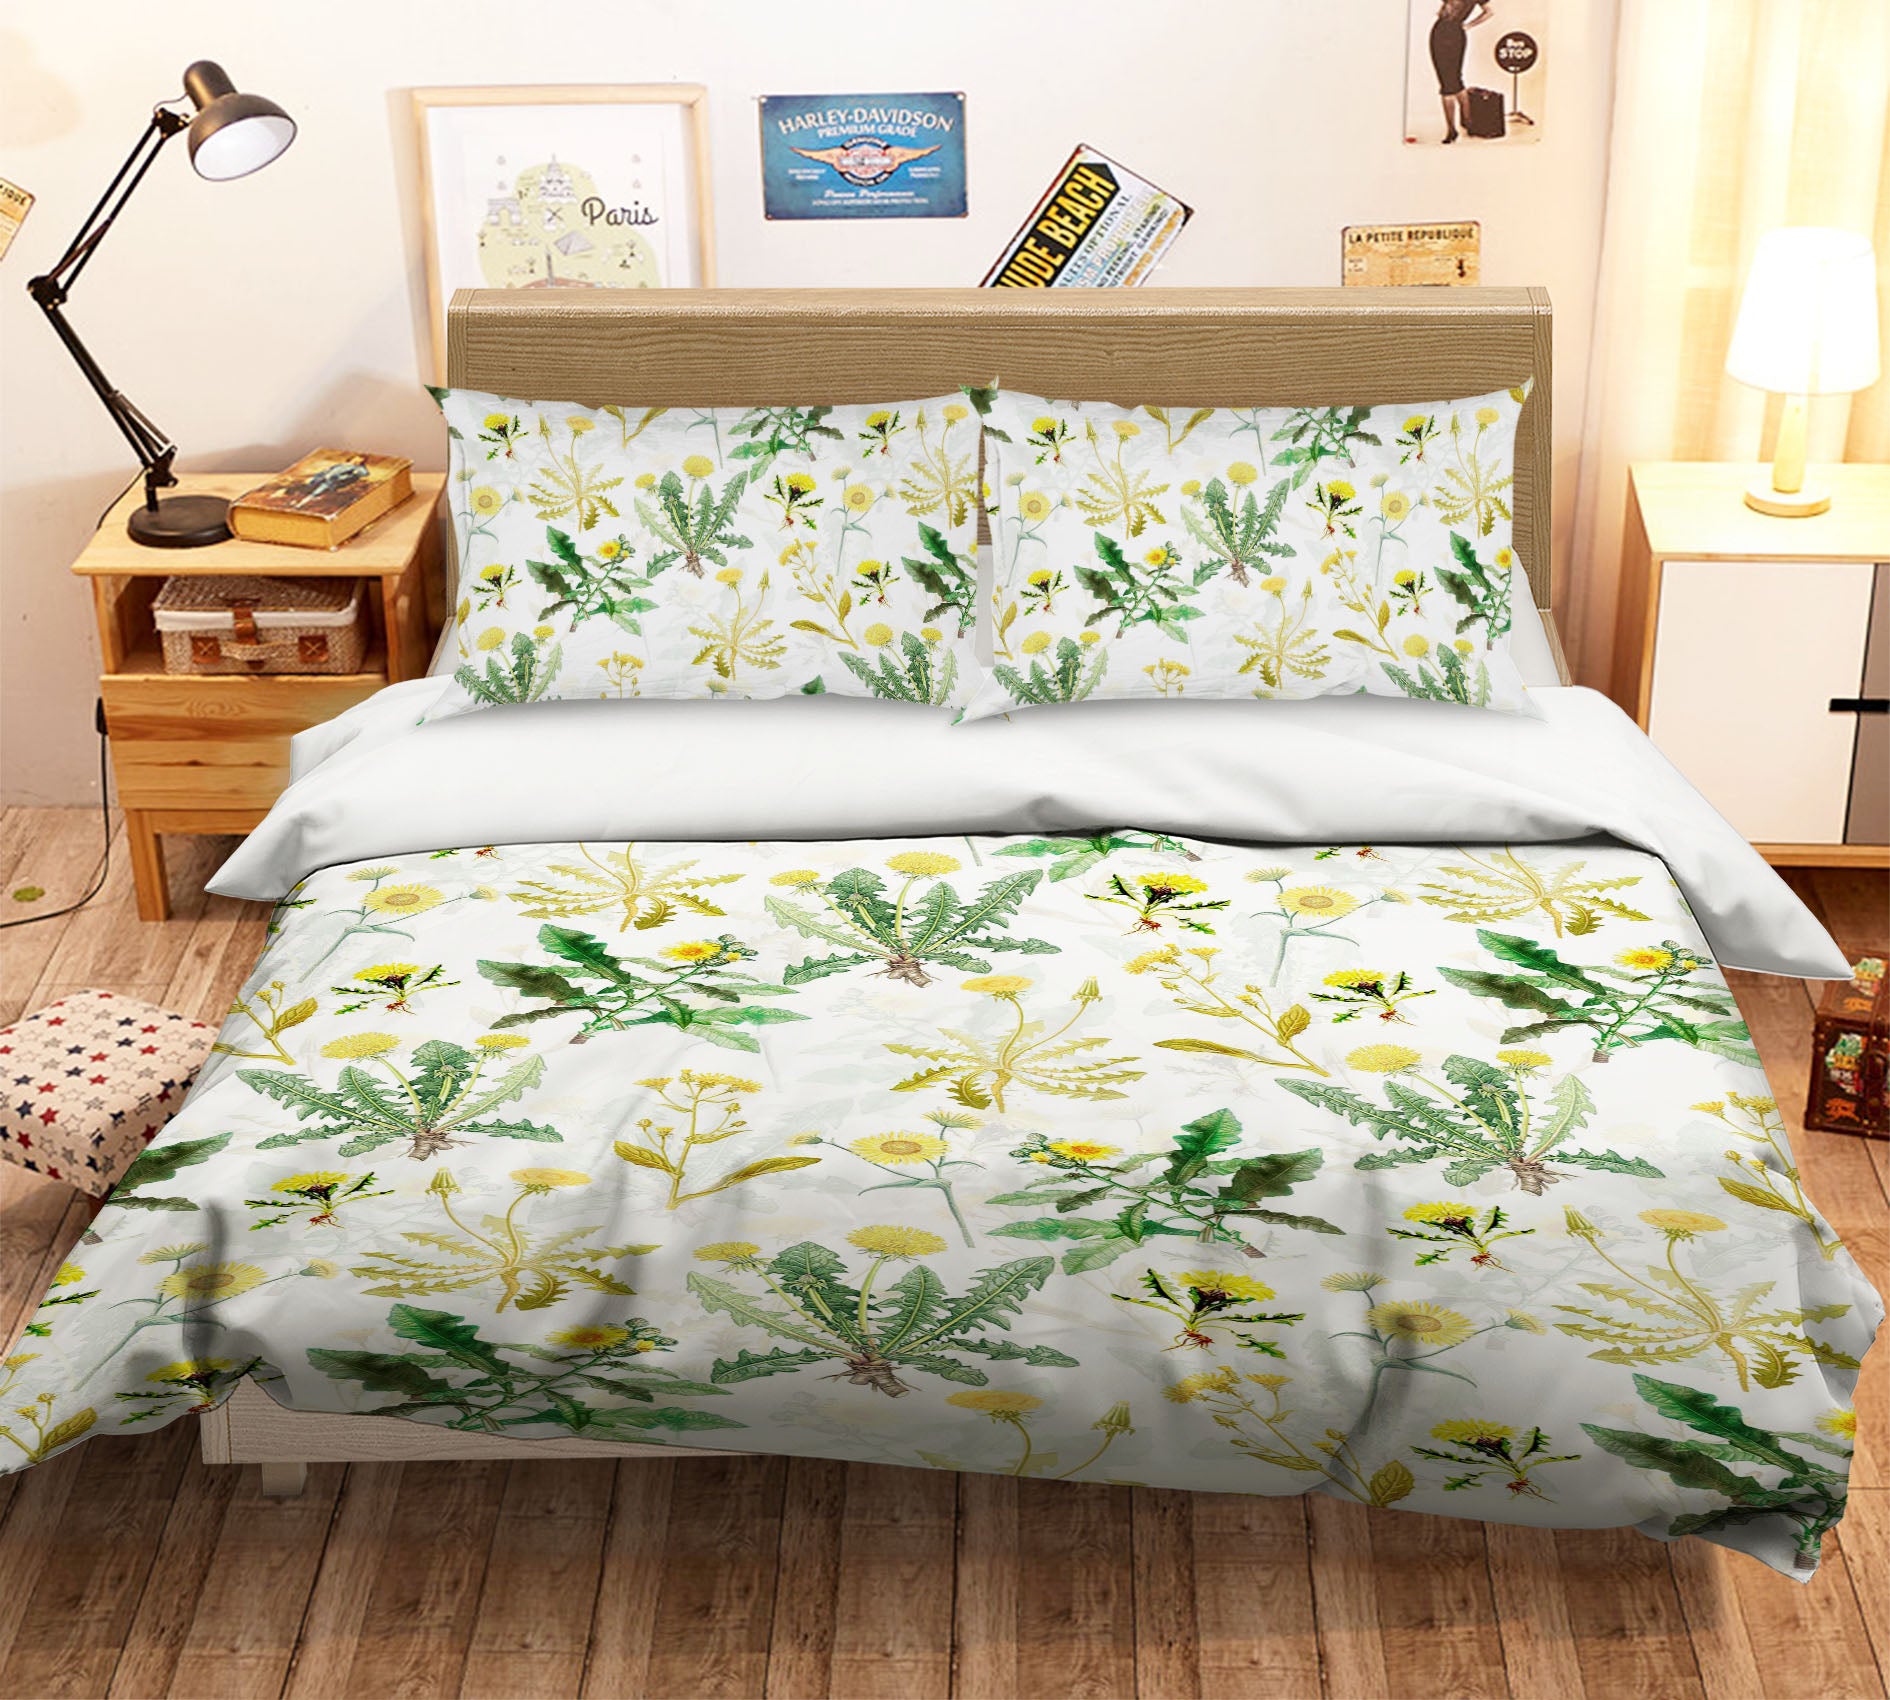 3D Yellow Flower Leaves 18215 Uta Naumann Bedding Bed Pillowcases Quilt